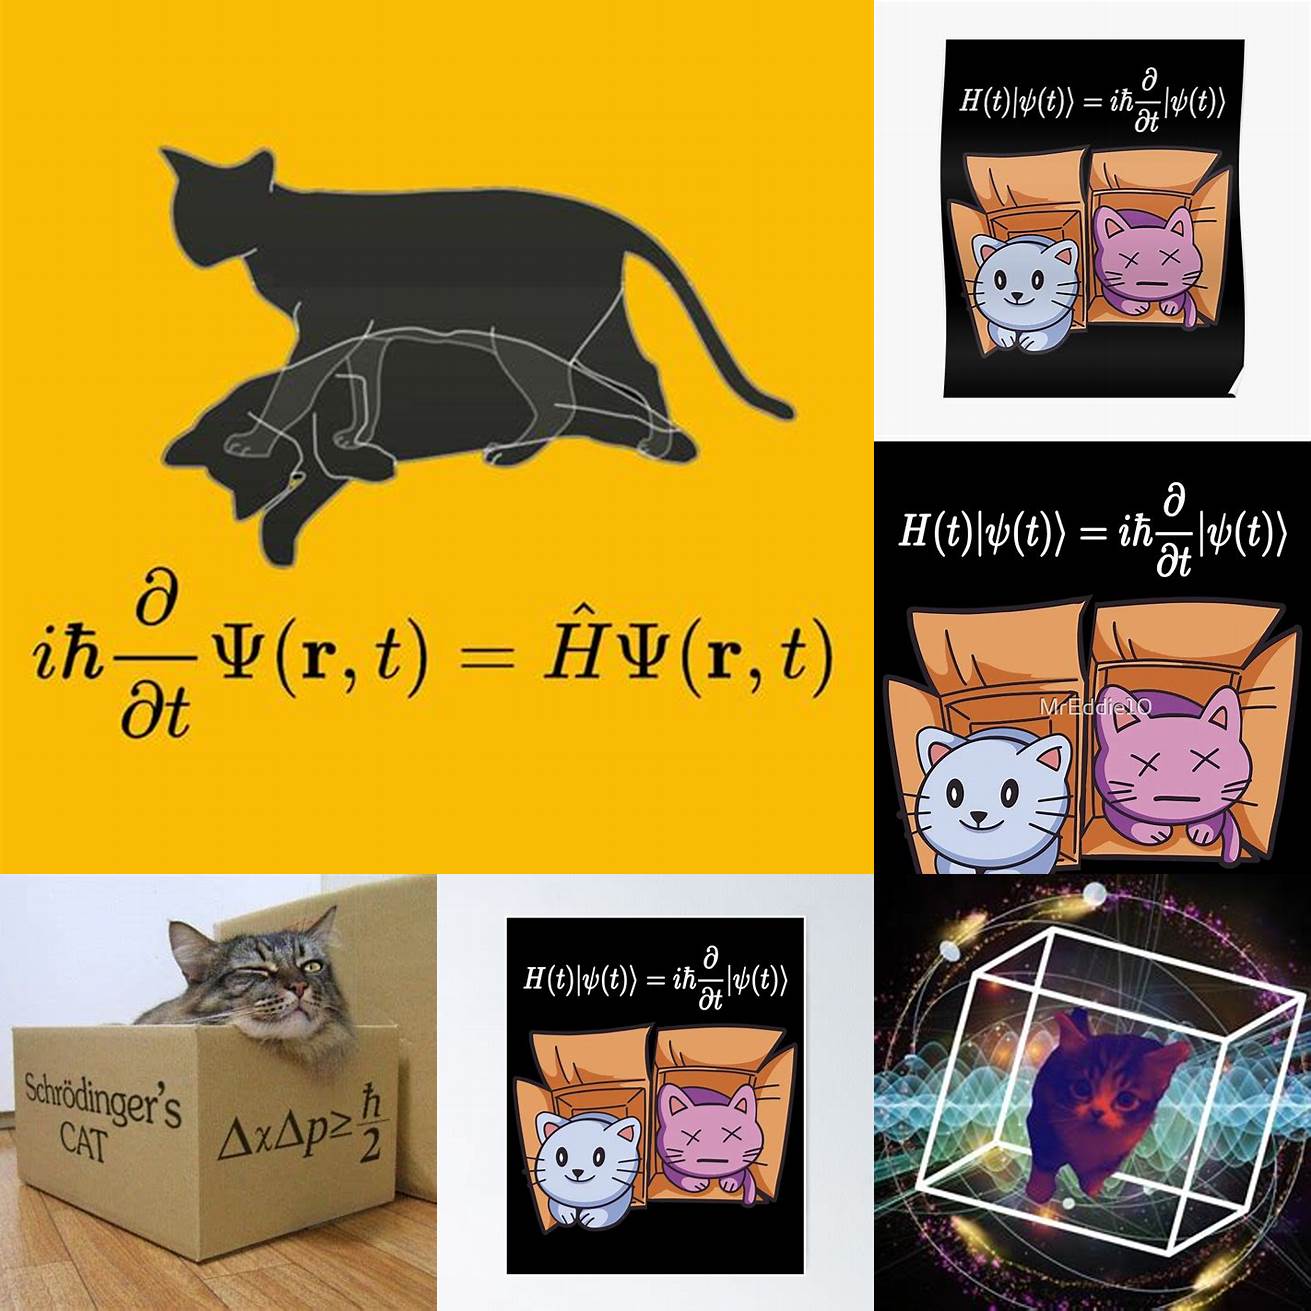 Schrödingers Equation